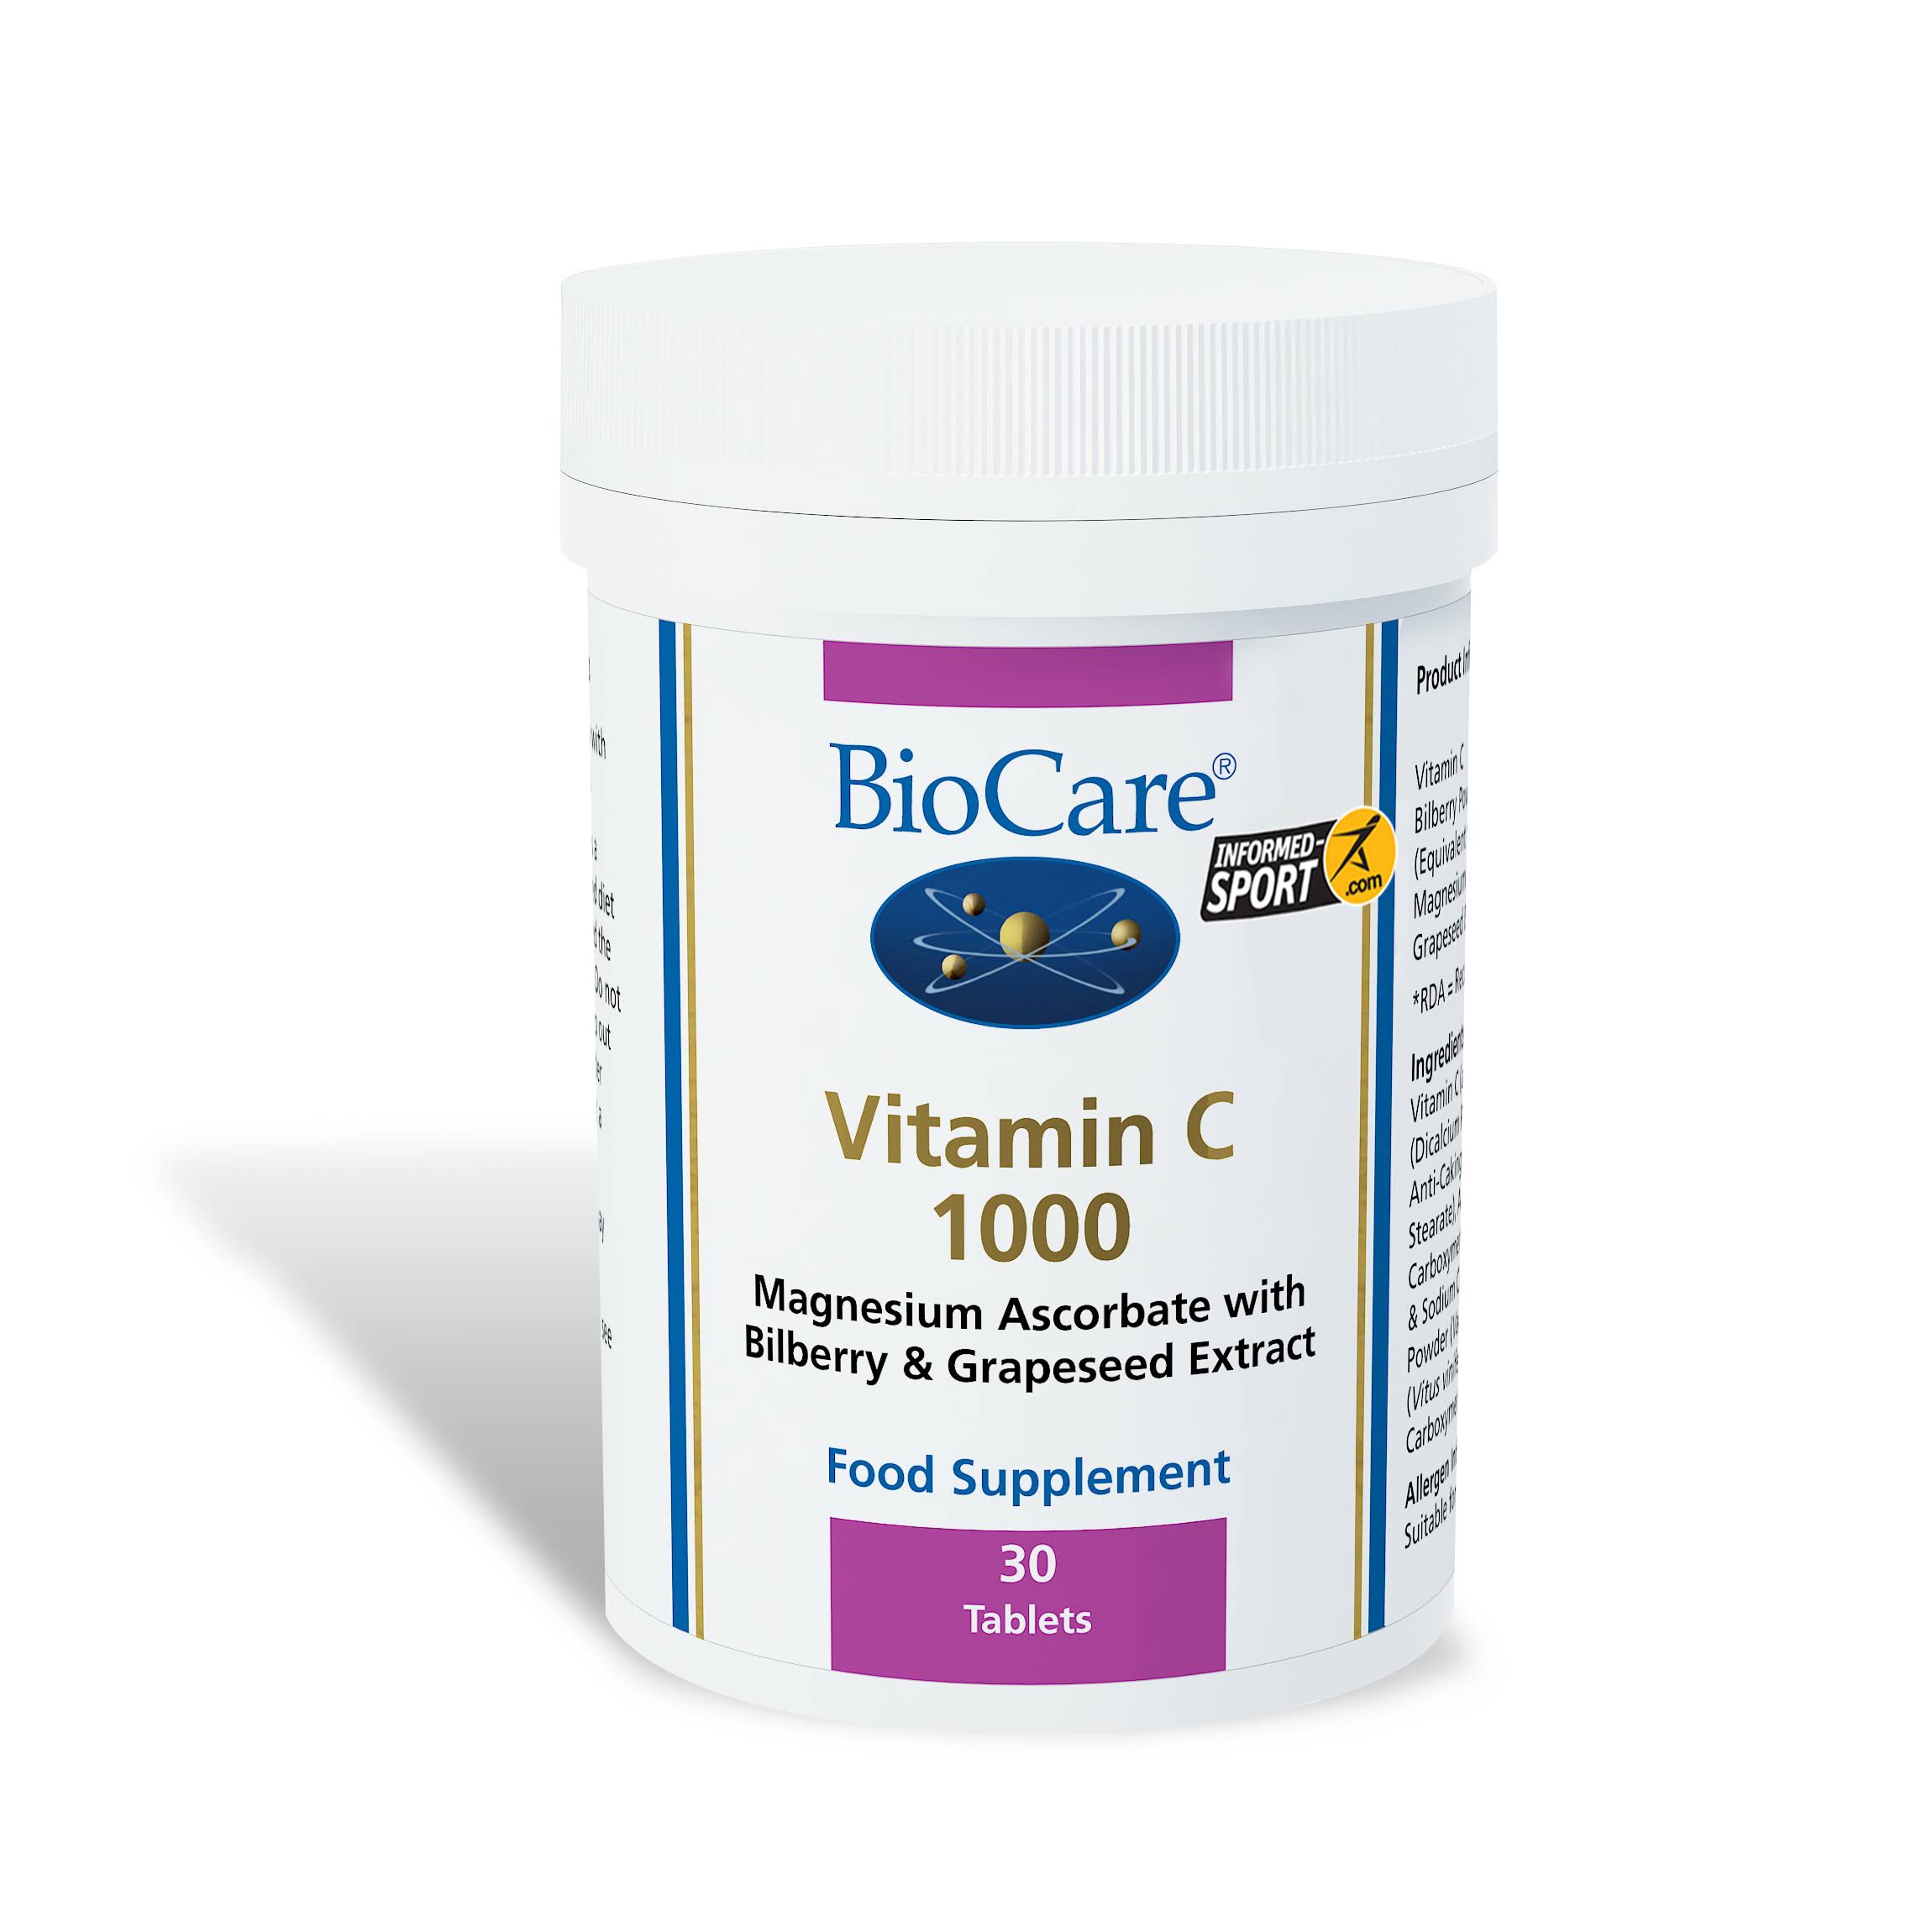 Biocare Vitamin C 1000mg Food Supplement - 30 Tablets